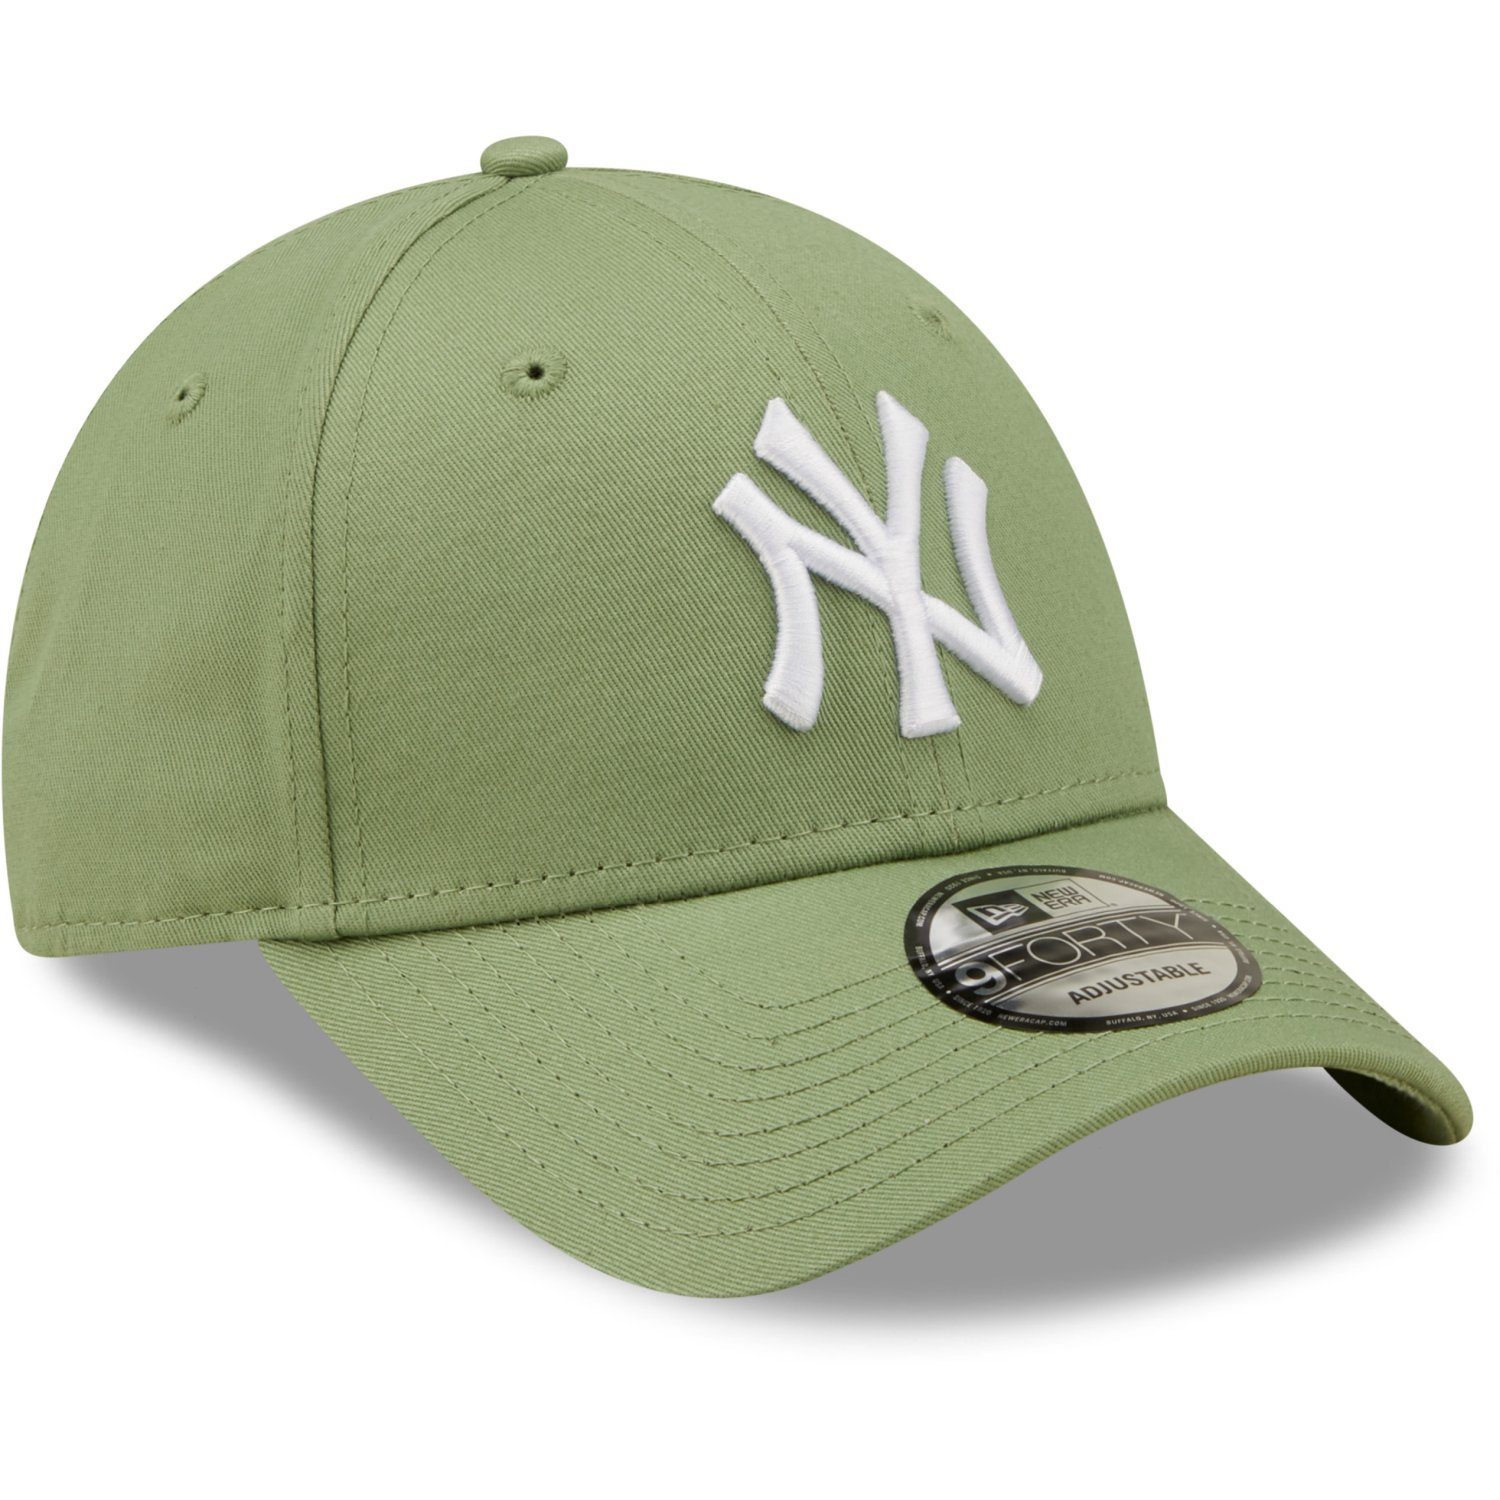 Baseball Yankees Era Strapback New New 9Forty York Cap jade